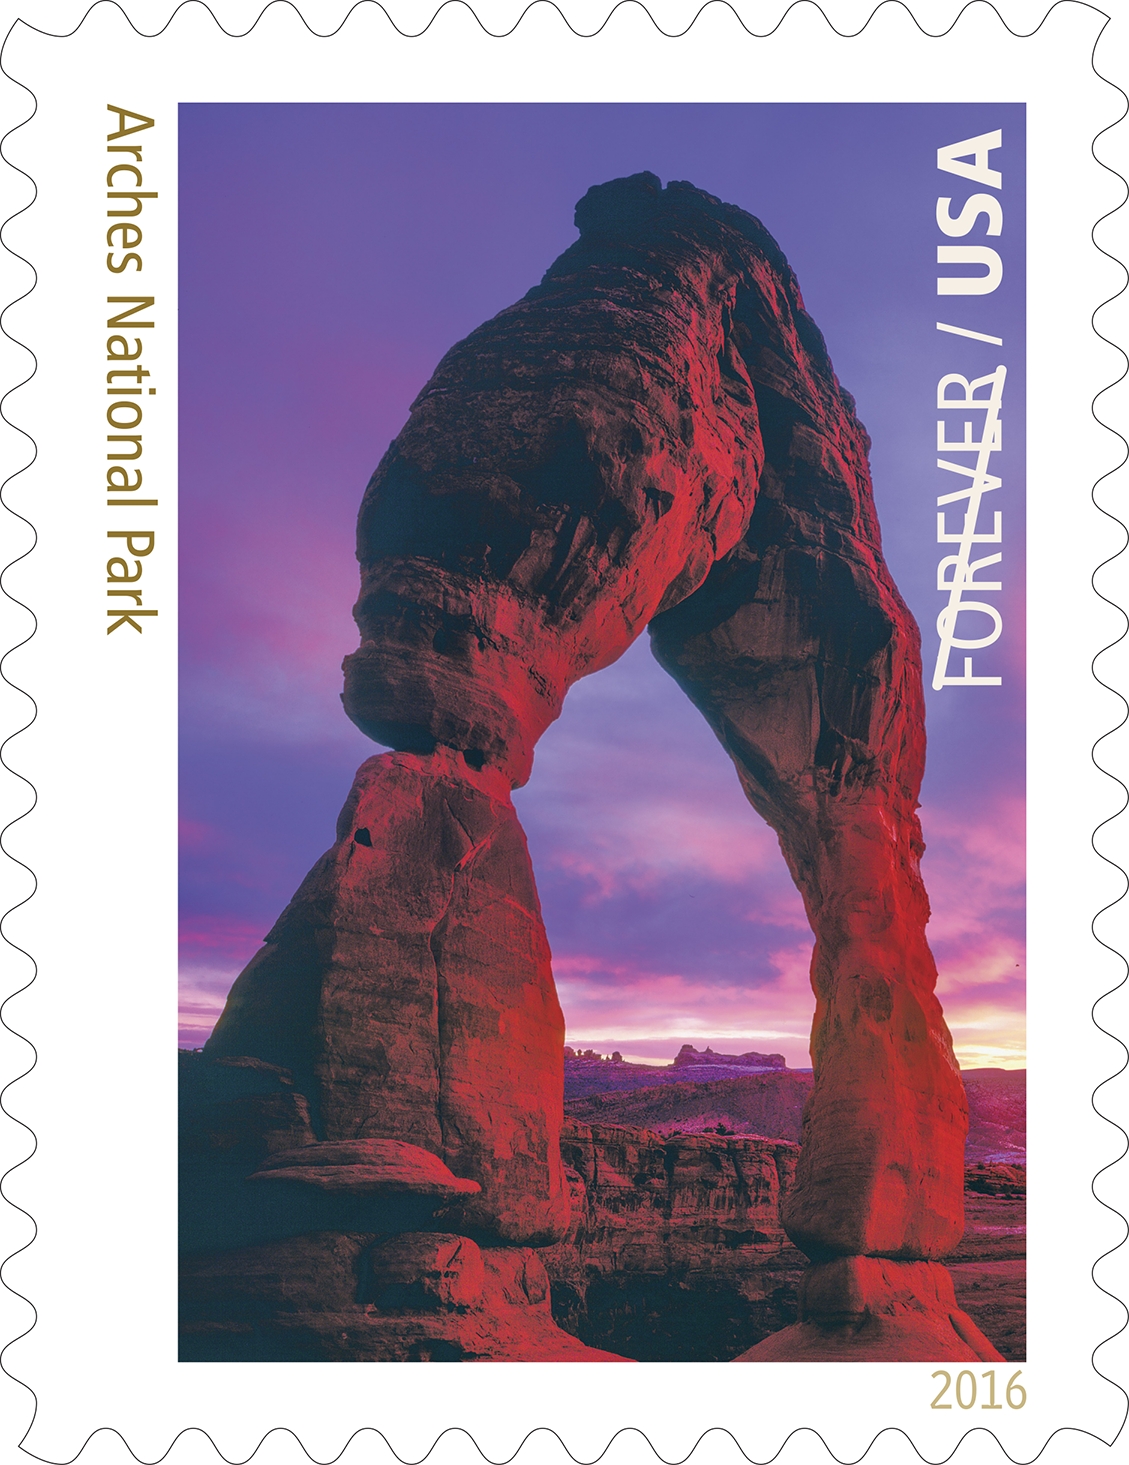 Arches National Park Centennial stamp